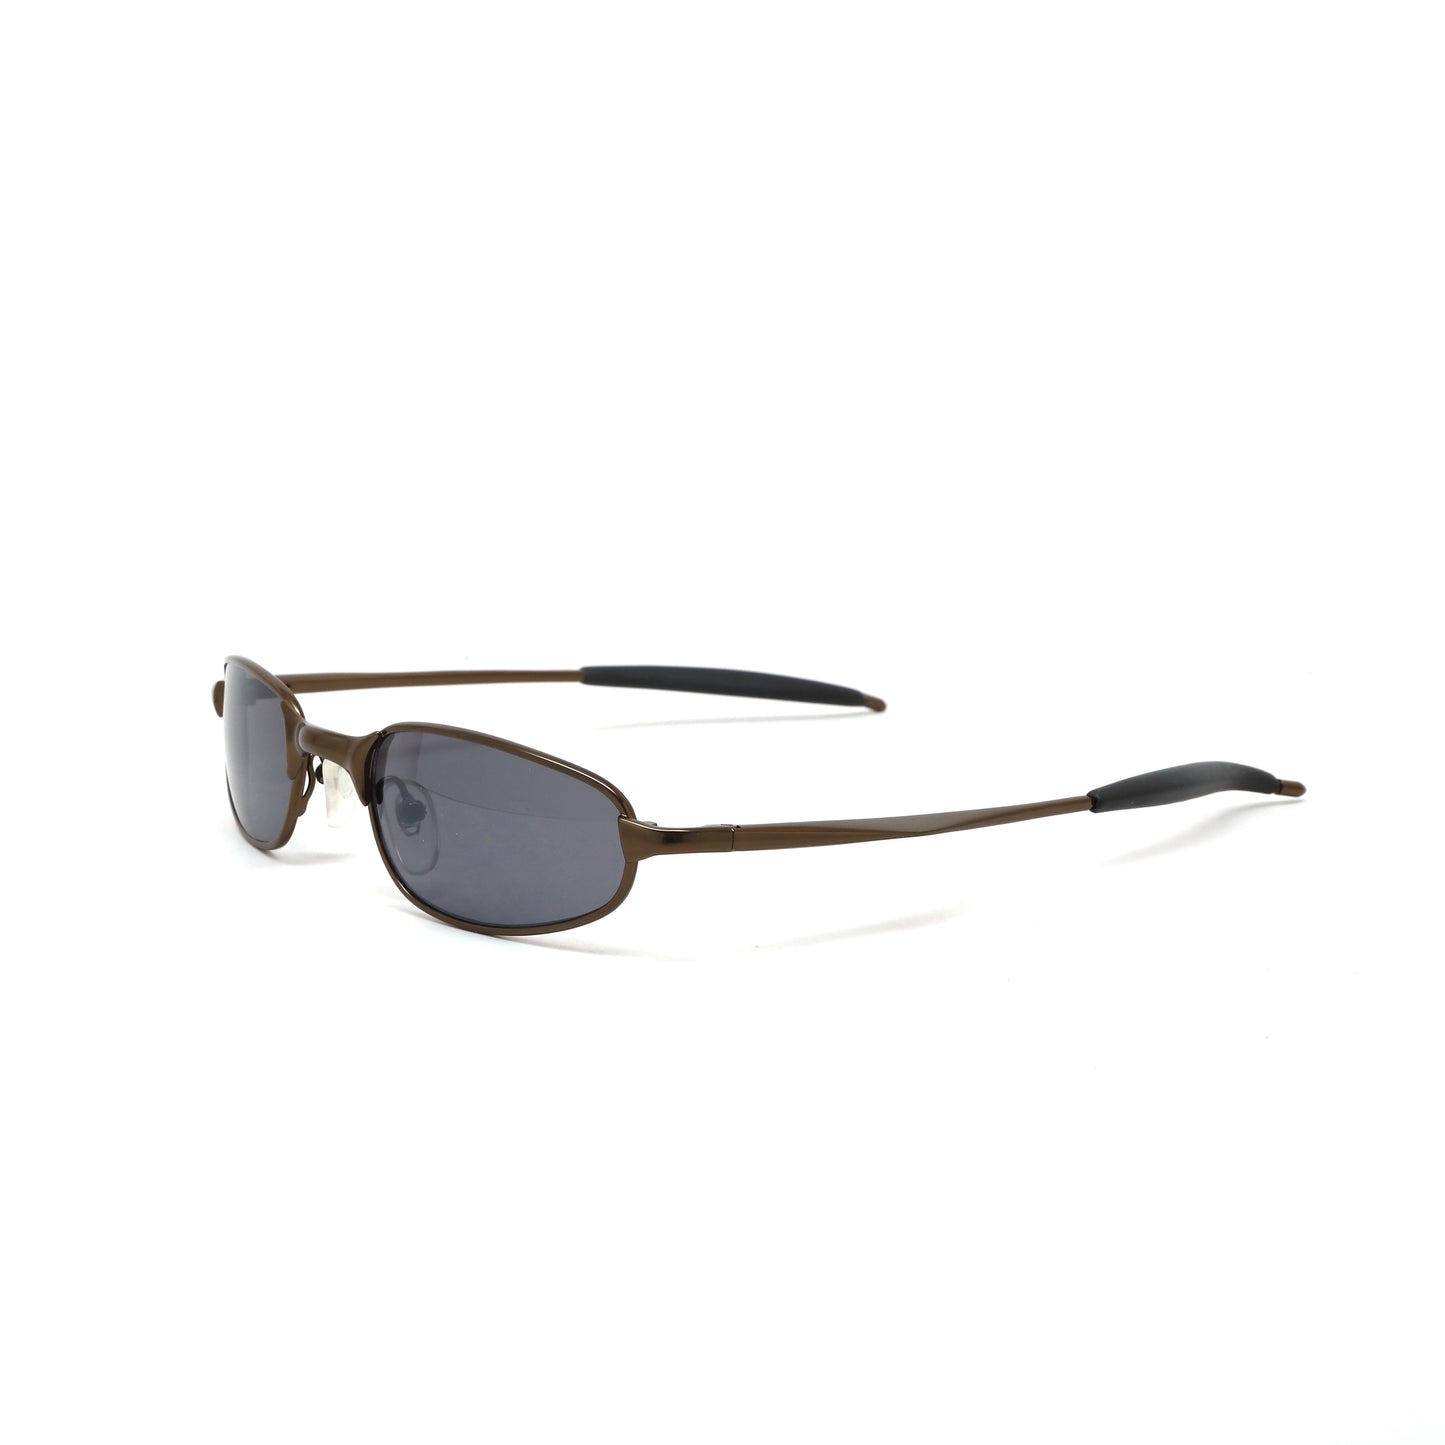 Vintage Small Size 90s Matrix Style Sunglasses - Grey